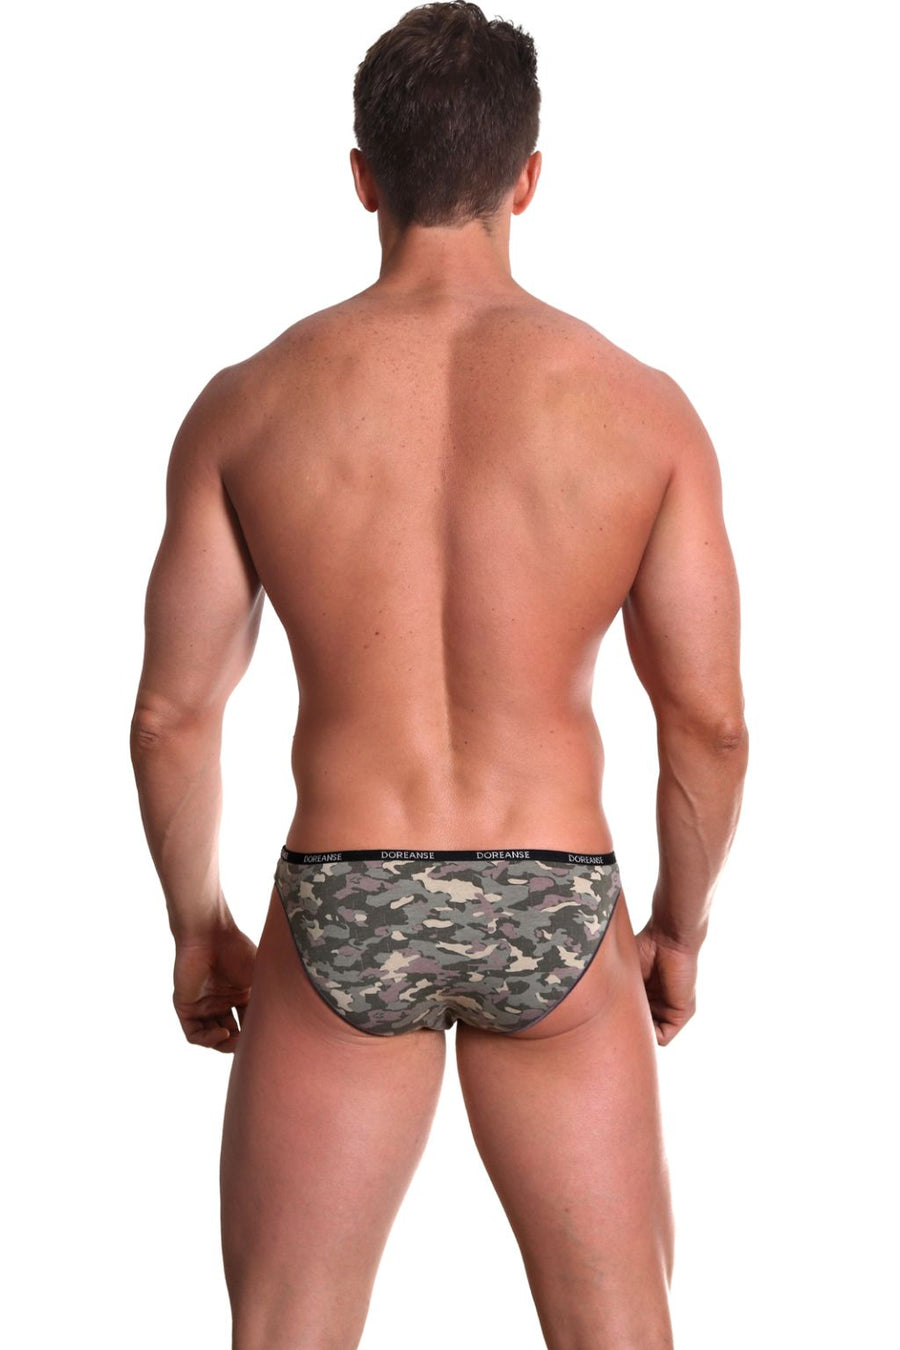 Doreanse Mens Lowrise Camouflage Bikini Brief Underwear – Bodywear for Men